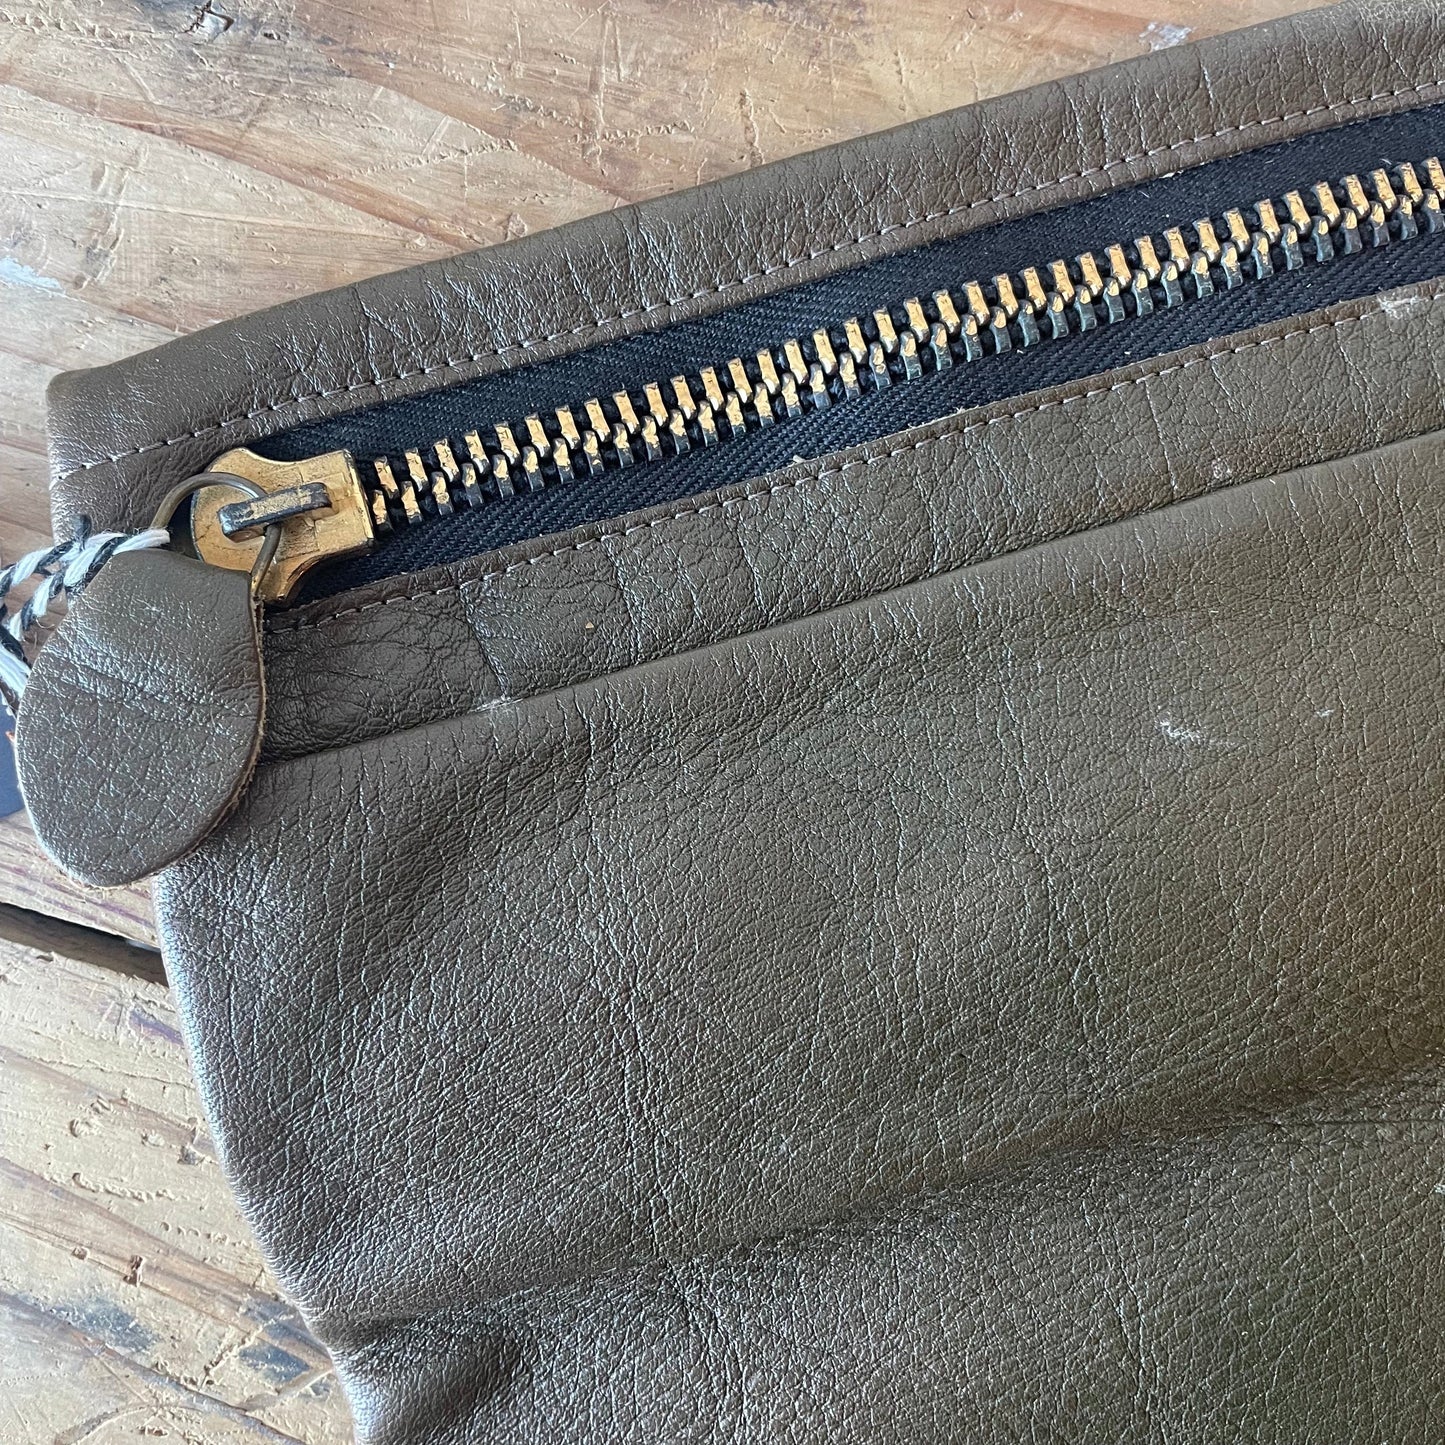 Vintage Brown Leather Folding Clutch